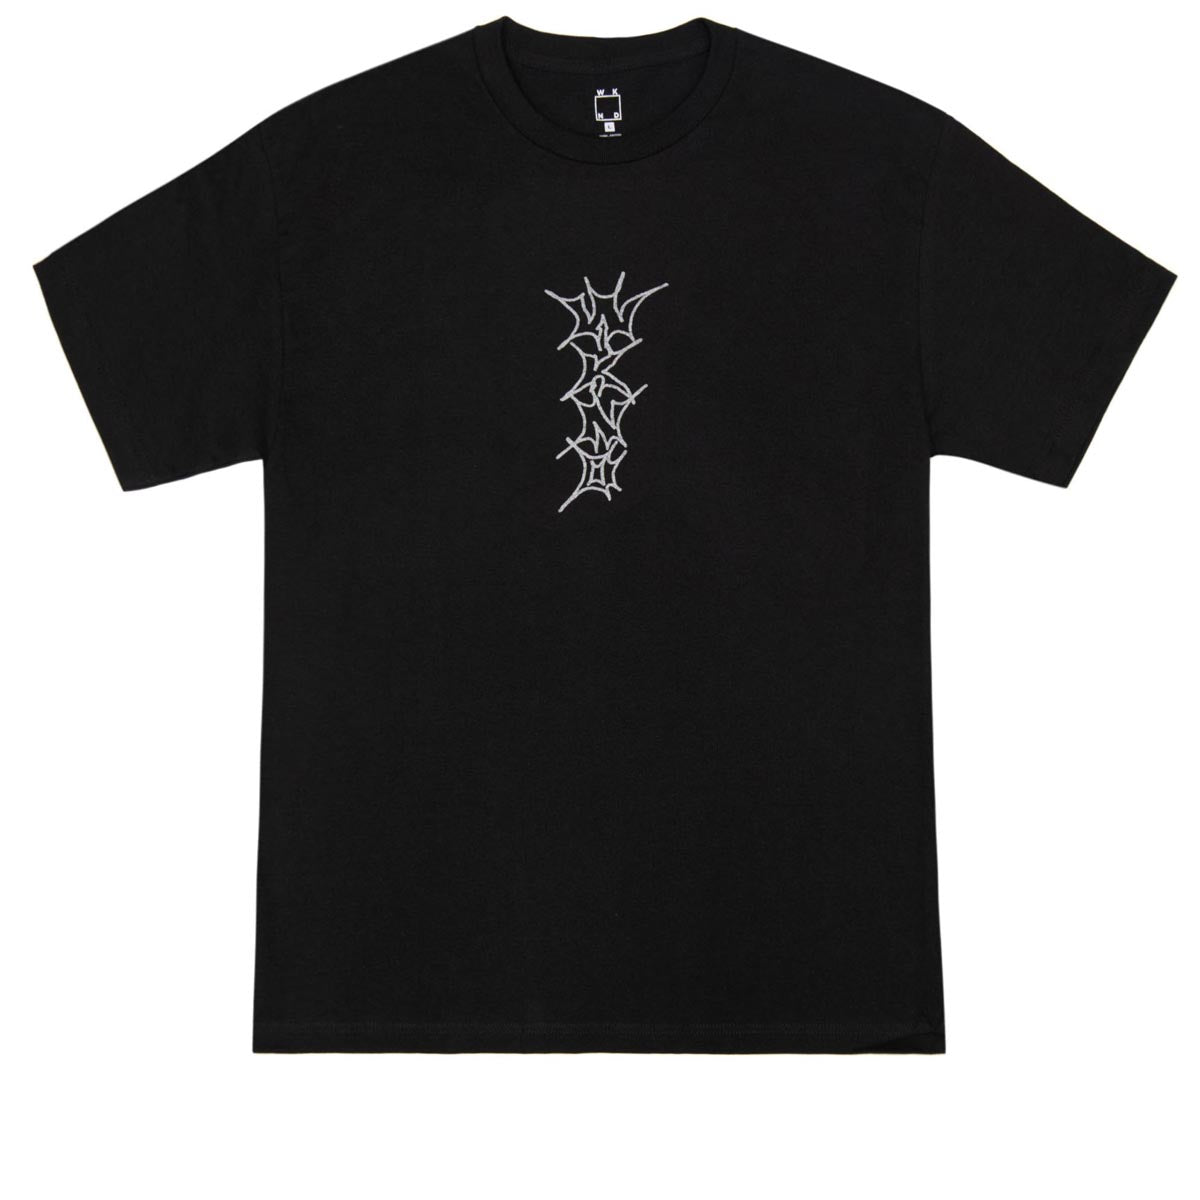 WKND Guardian T-Shirt - Black image 1